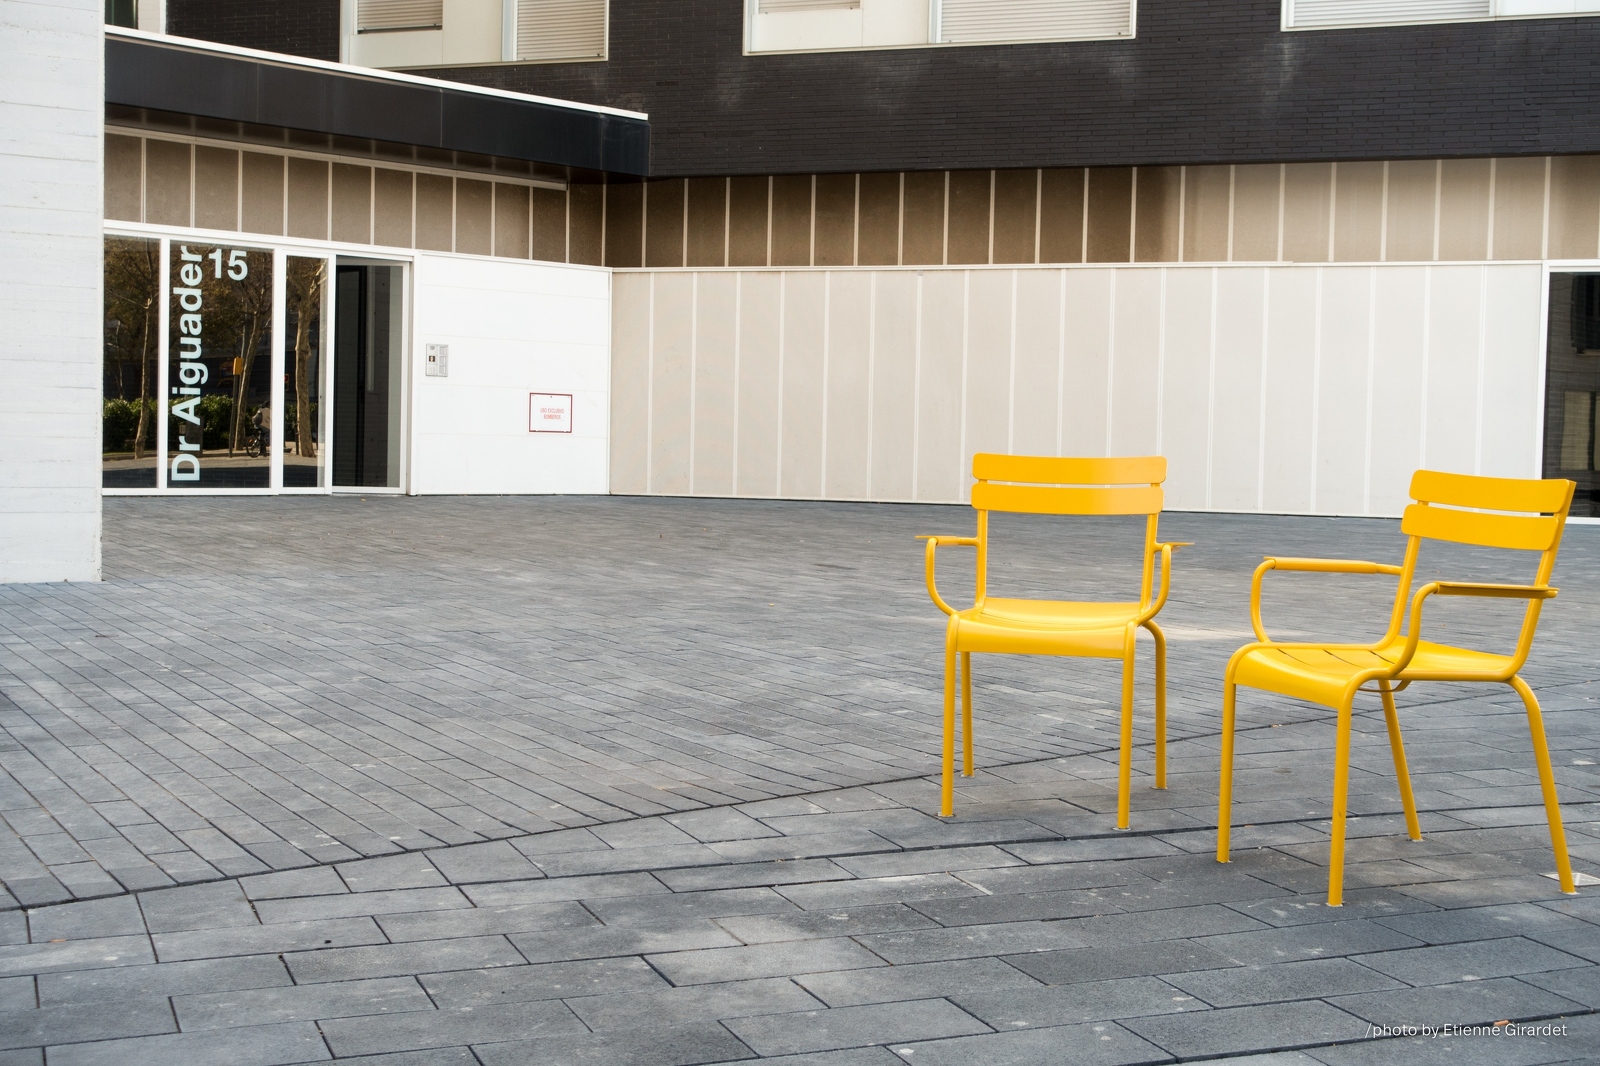 201603_23_DSC06395-yellow-chairs-outdoor-by-E-Girardet.jpg